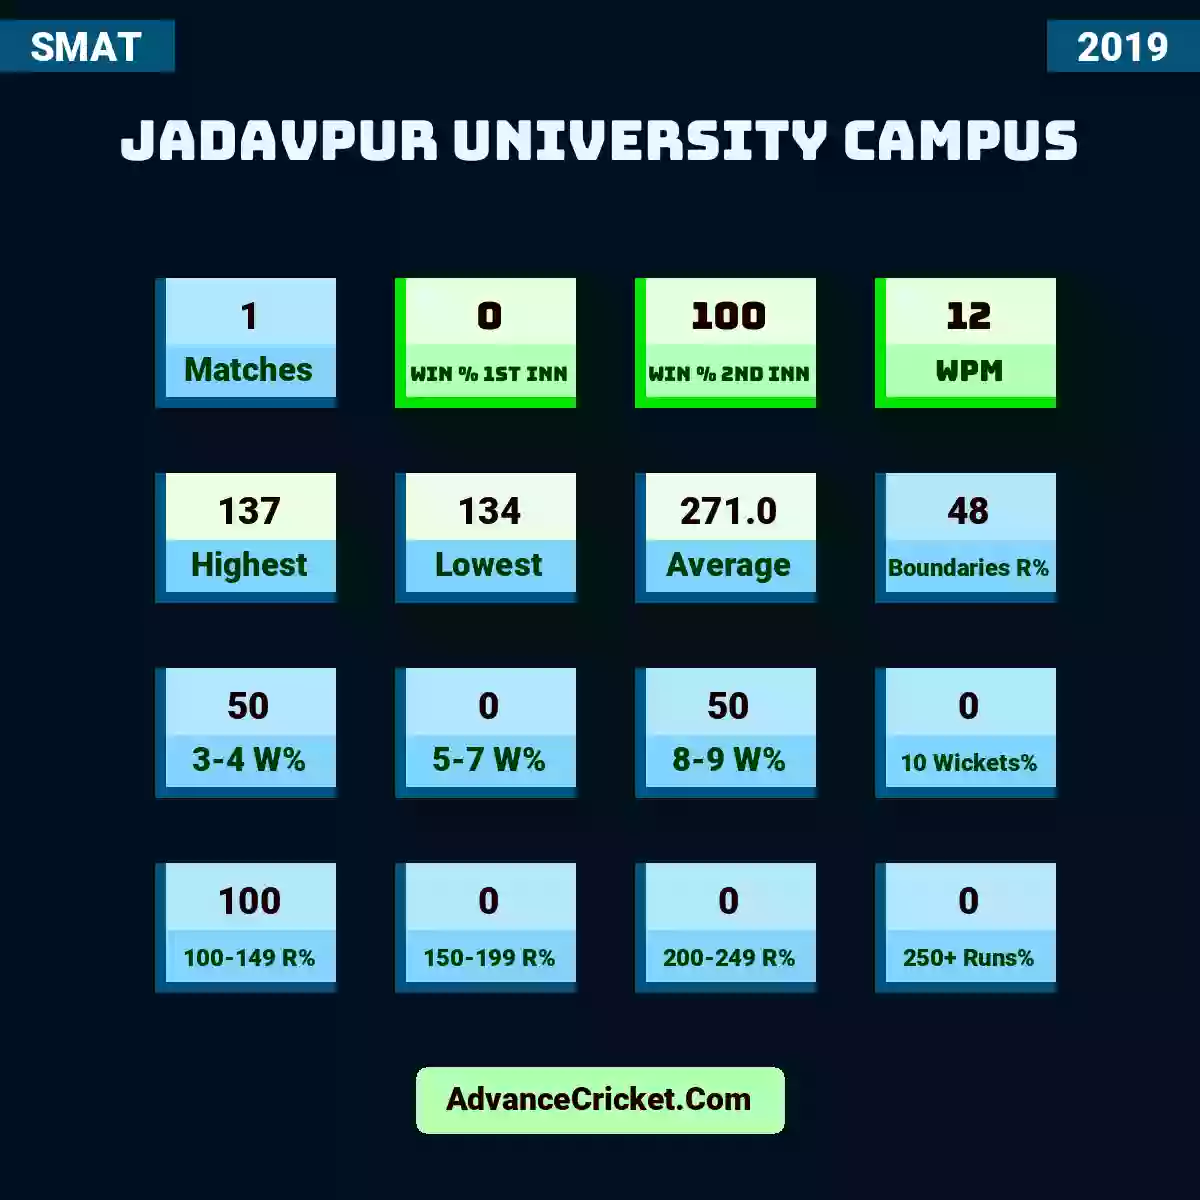 Image showing Jadavpur University Campus with Matches: 1, Win % 1st Inn: 0, Win % 2nd Inn: 100, WPM: 12, Highest: 137, Lowest: 134, Average: 271.0, Boundaries R%: 48, 3-4 W%: 50, 5-7 W%: 0, 8-9 W%: 50, 10 Wickets%: 0, 100-149 R%: 100, 150-199 R%: 0, 200-249 R%: 0, 250+ Runs%: 0.